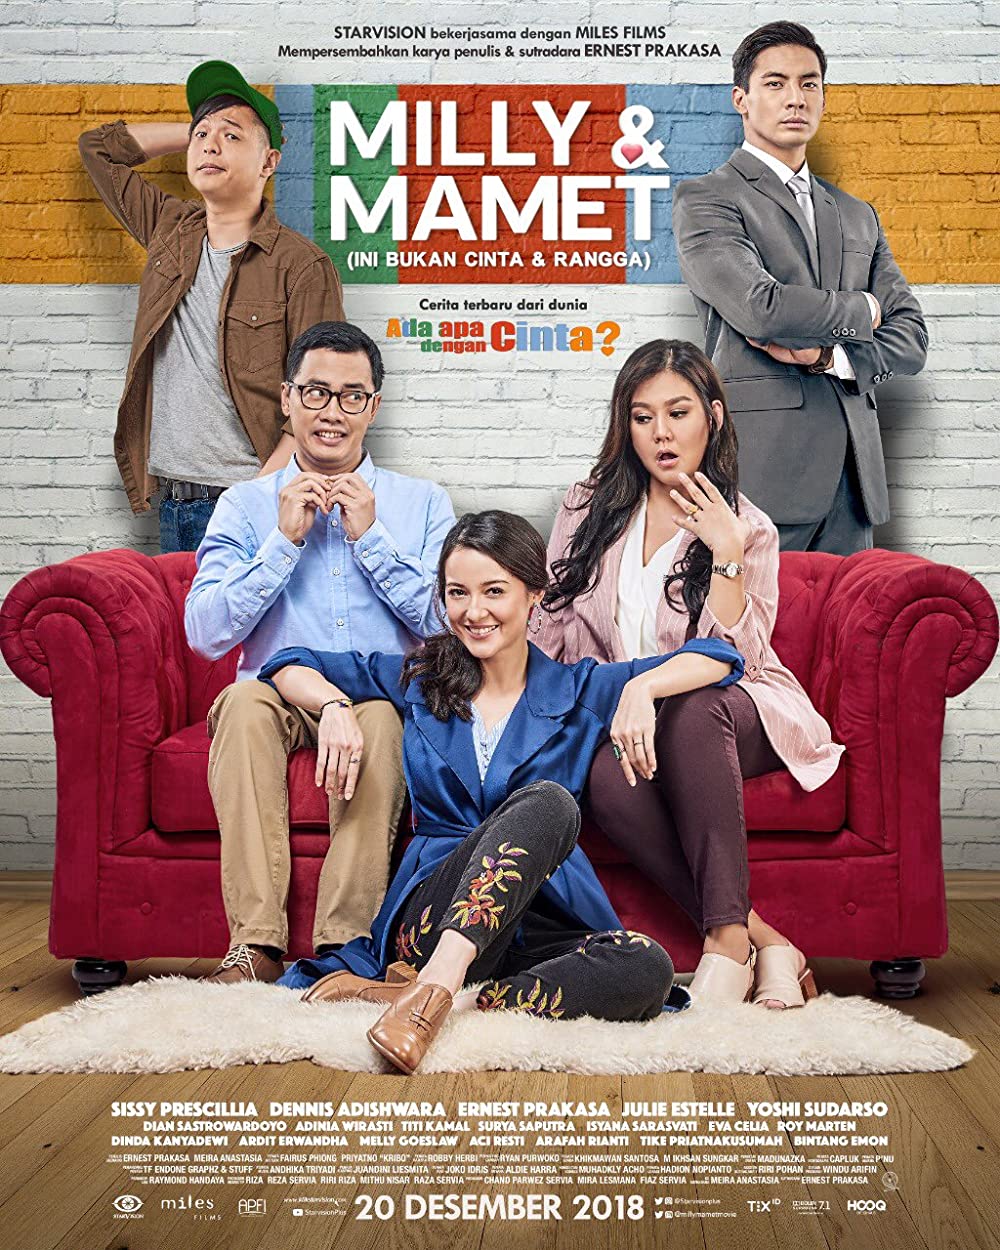 7 Film Indonesia di Netflix tentang pernikahan, penuh suka dan duka